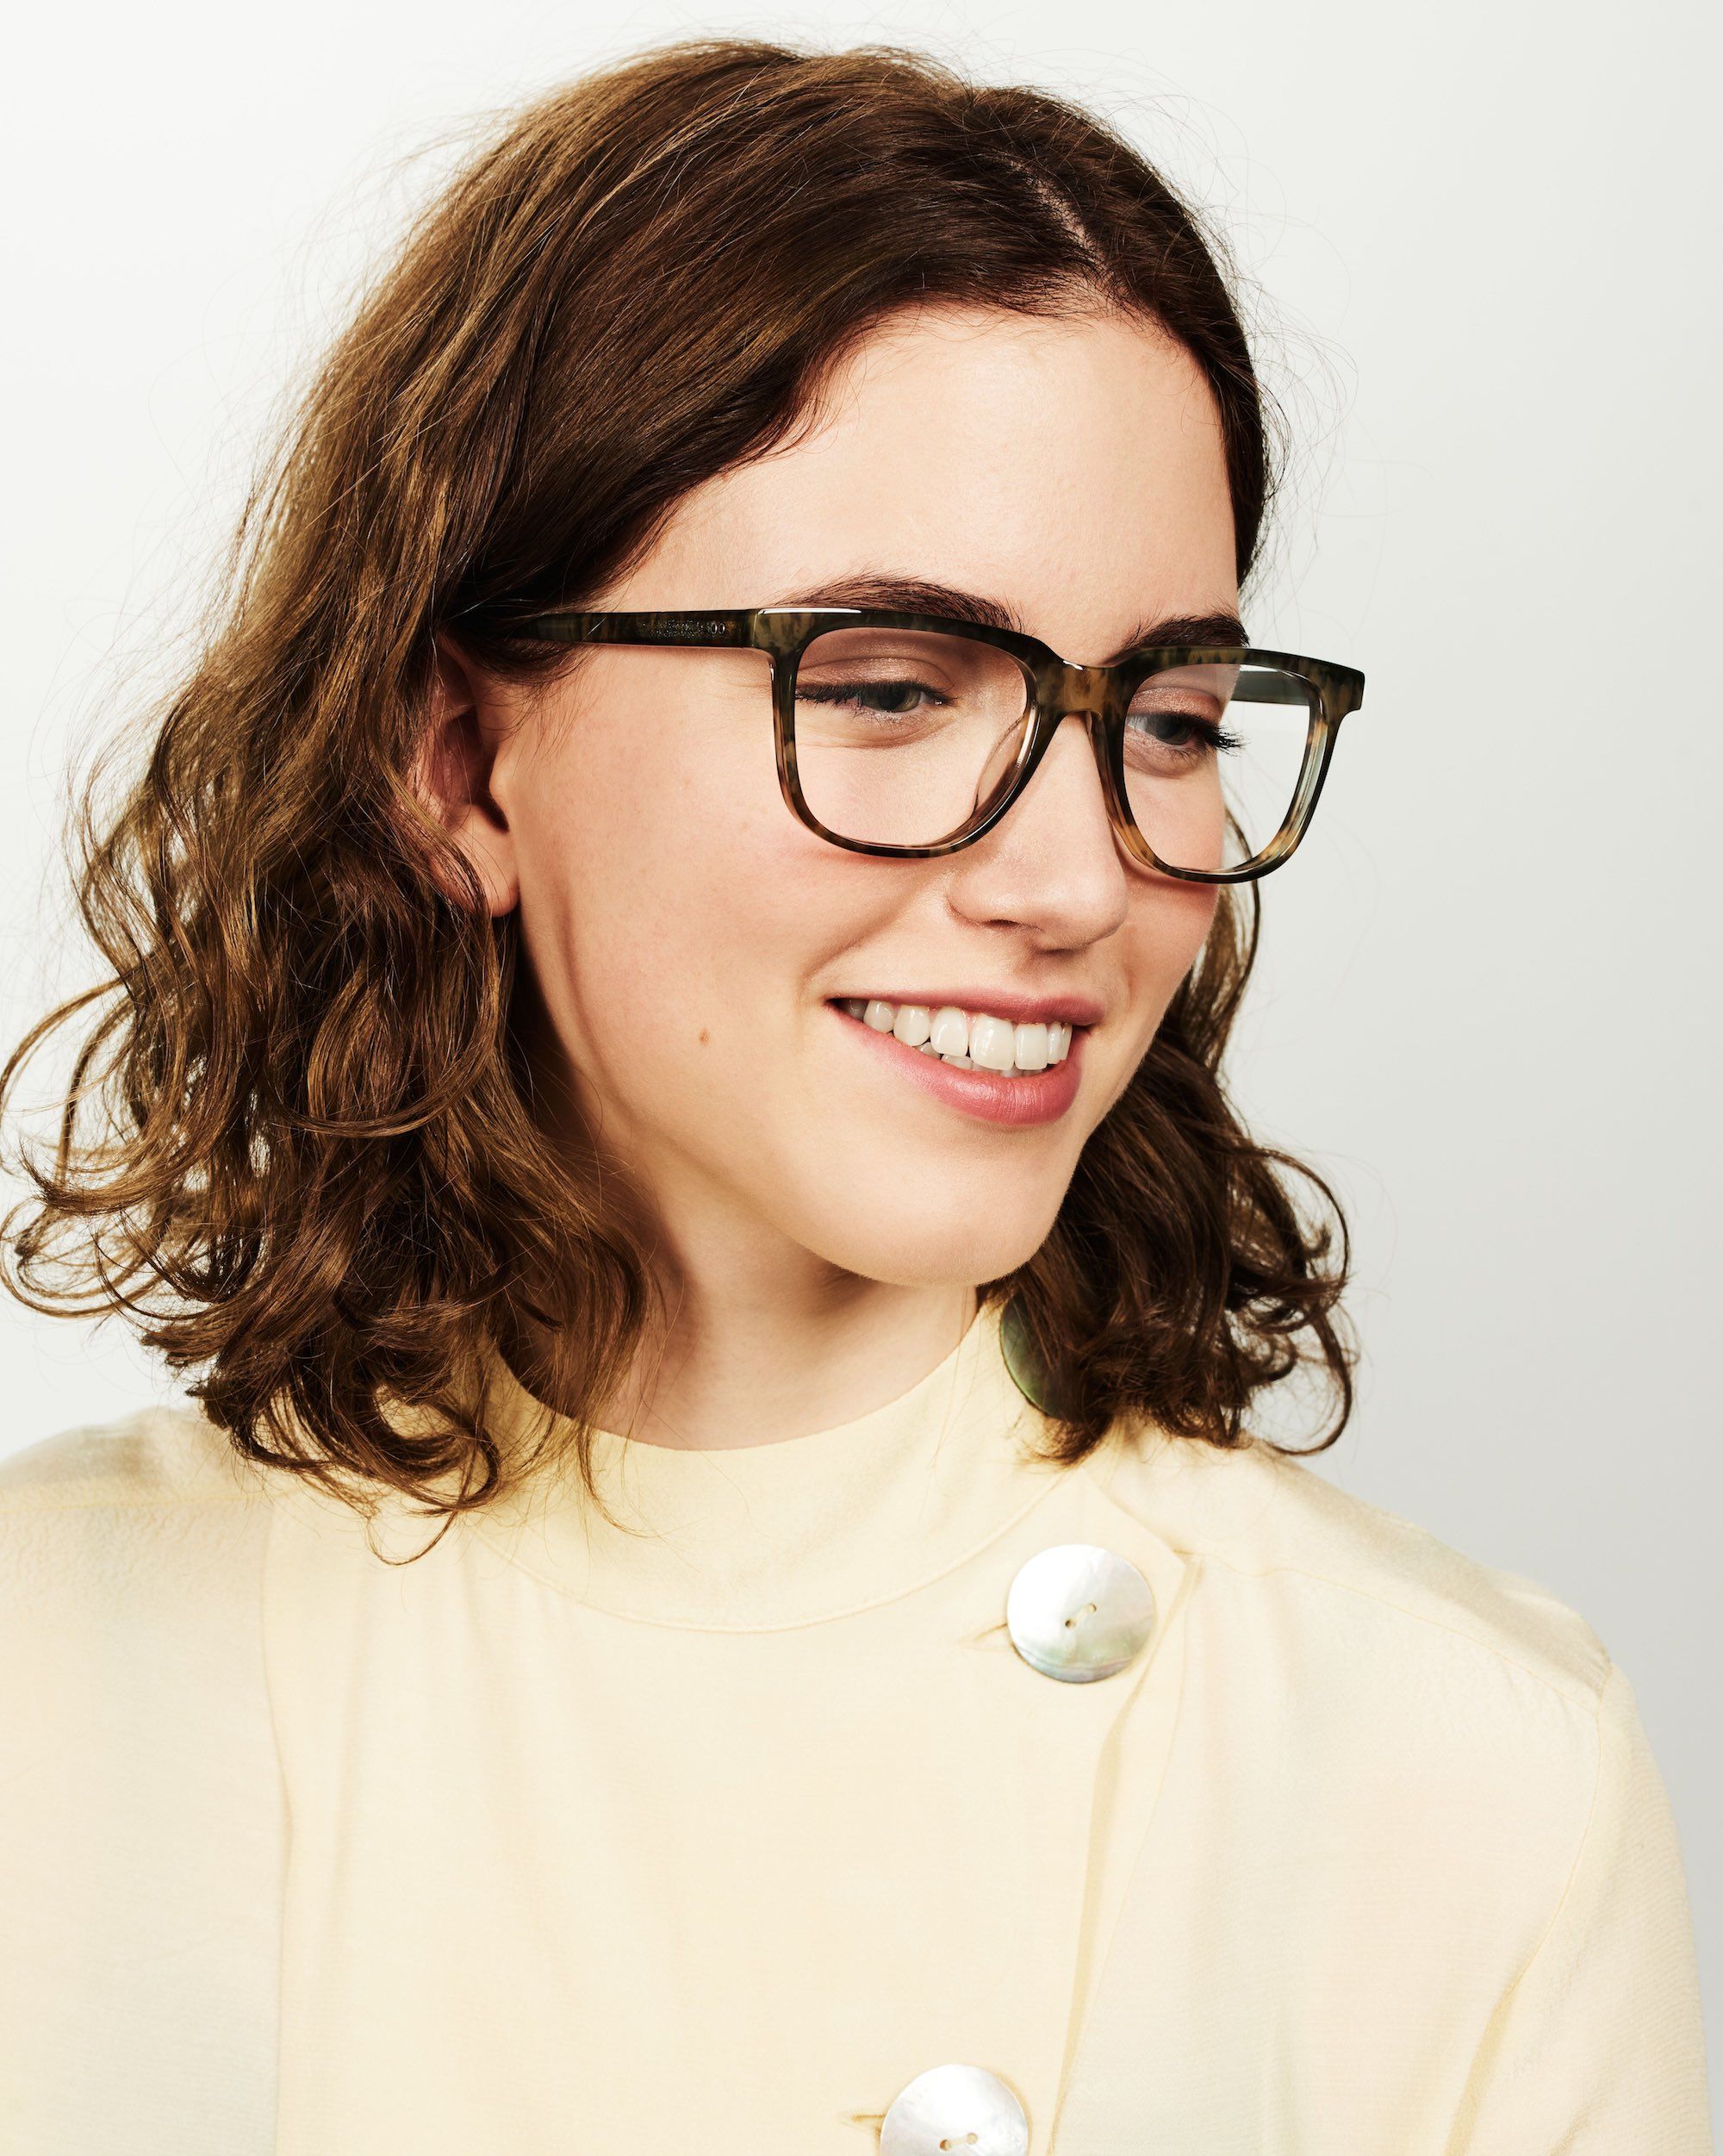 Rekomendasi Model Kacamata untuk Bentuk Wajah Oval